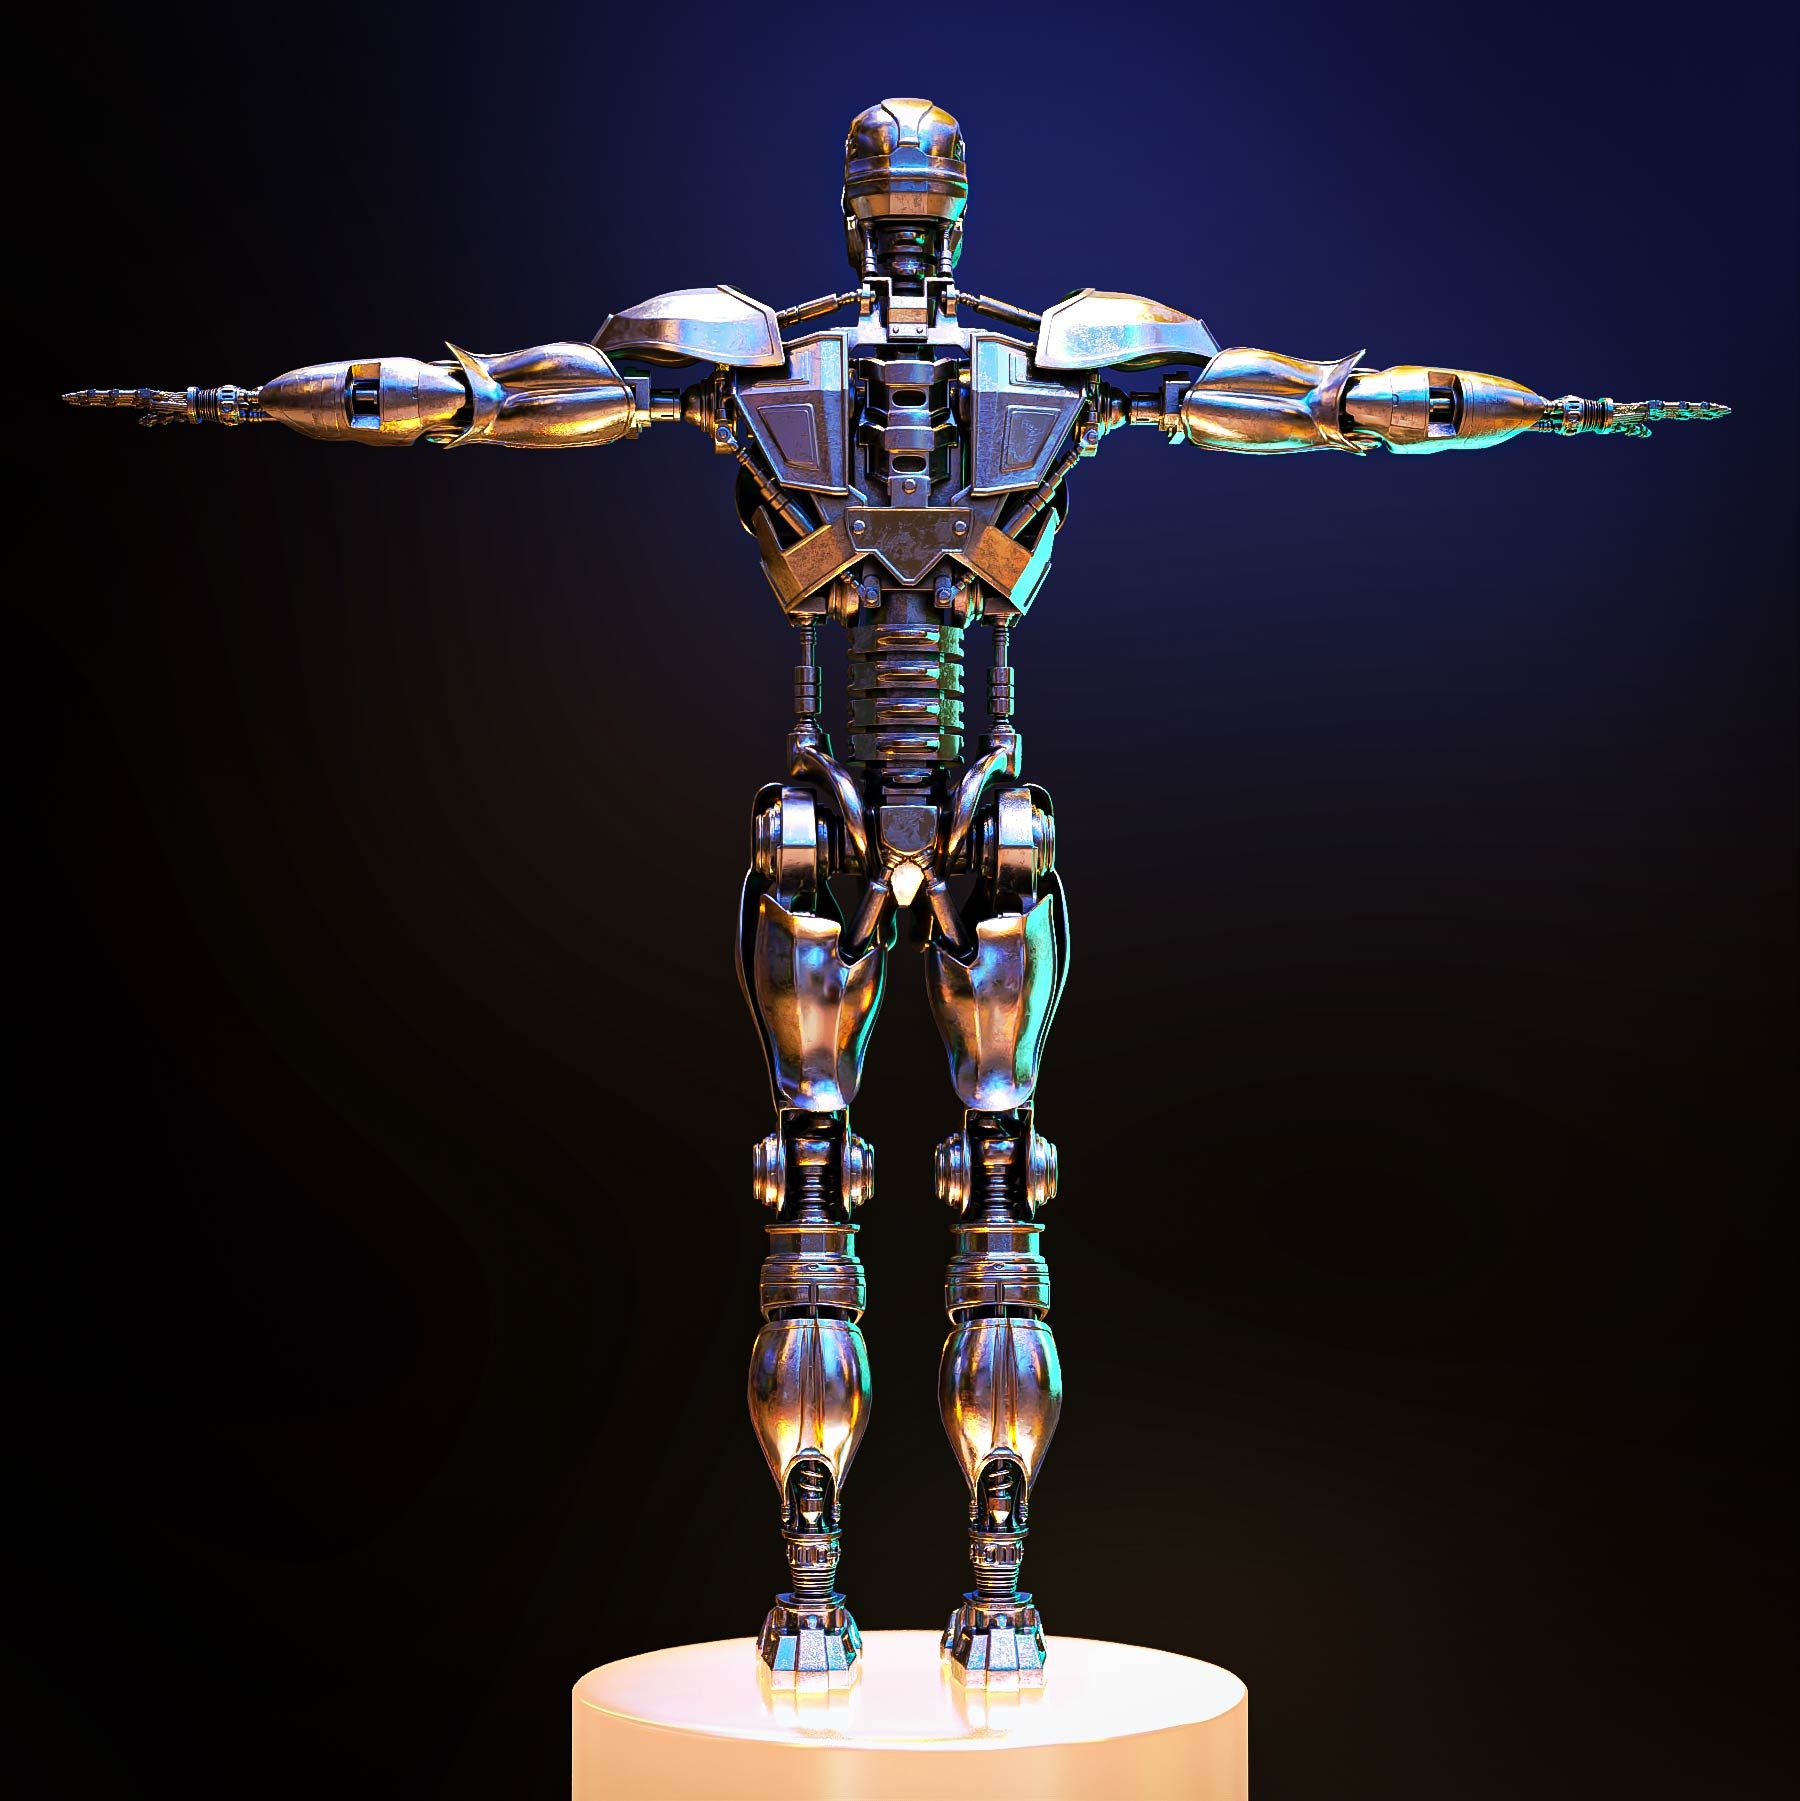 High-Fidelity-Rigged-Terminator-3D-Model---Tech-Enhanced-Futuristic-Exoskeleton